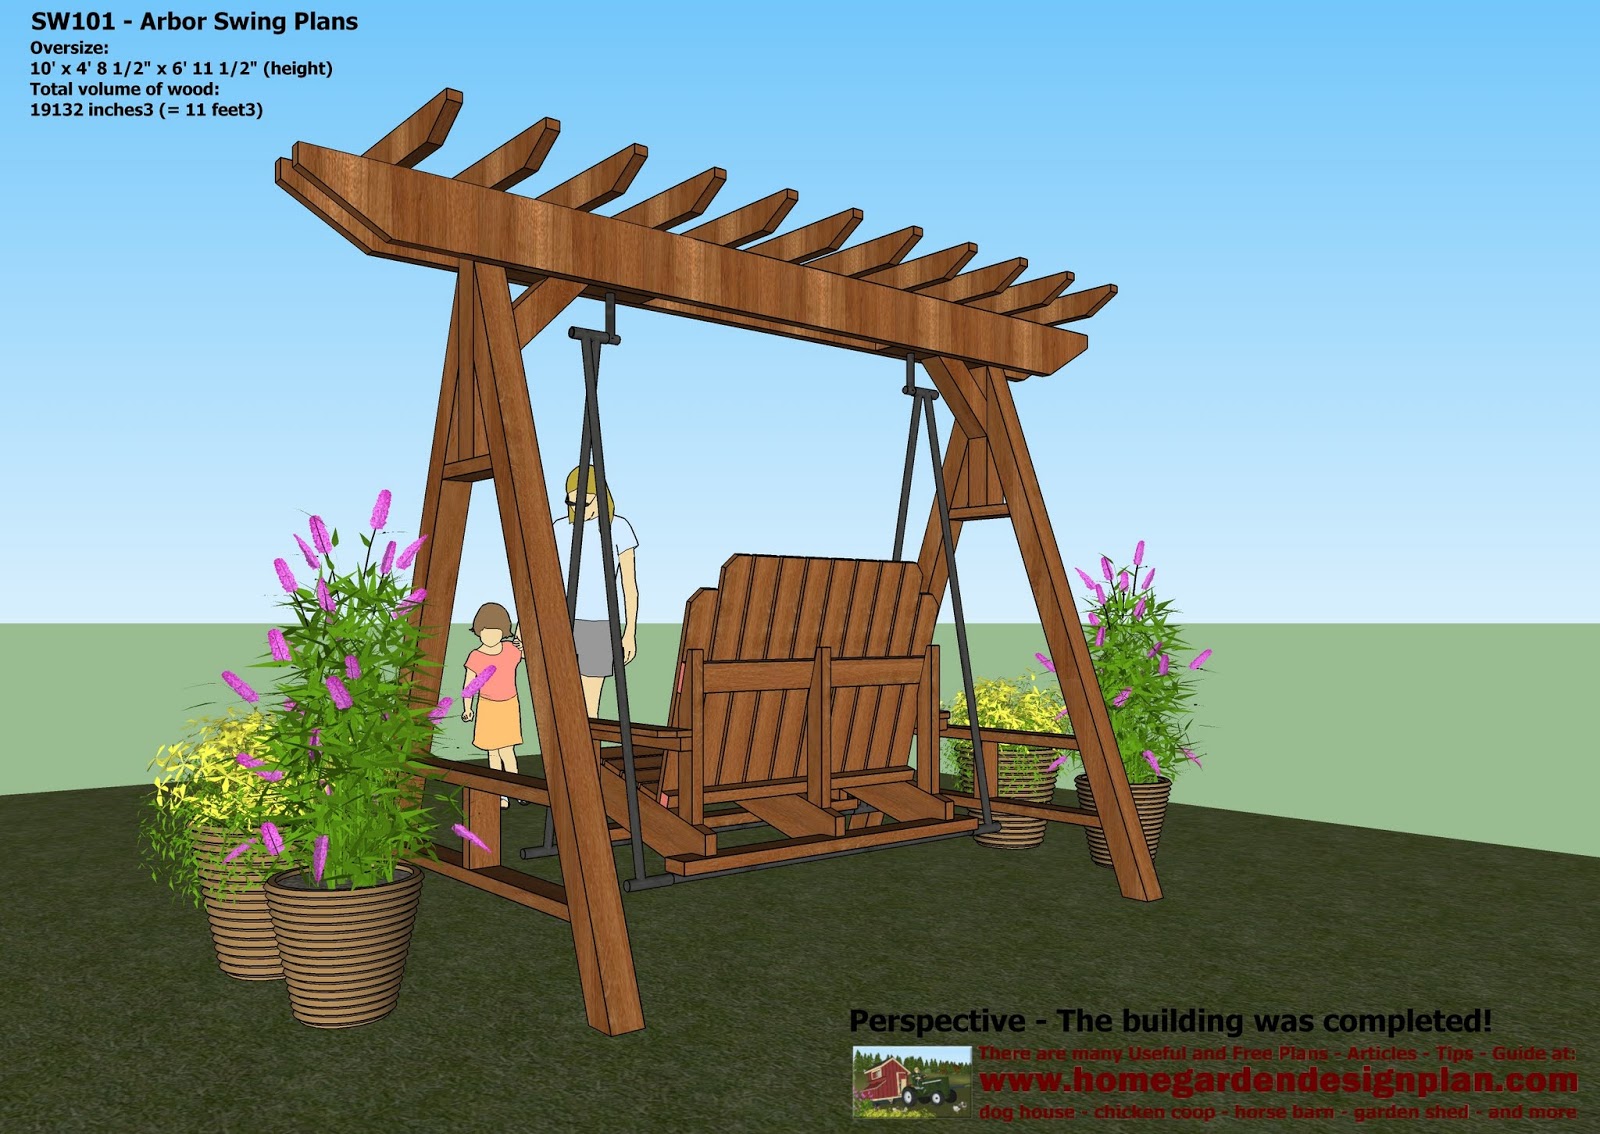 home garden plans: SW101 - Arbor Swing Plans Construction 